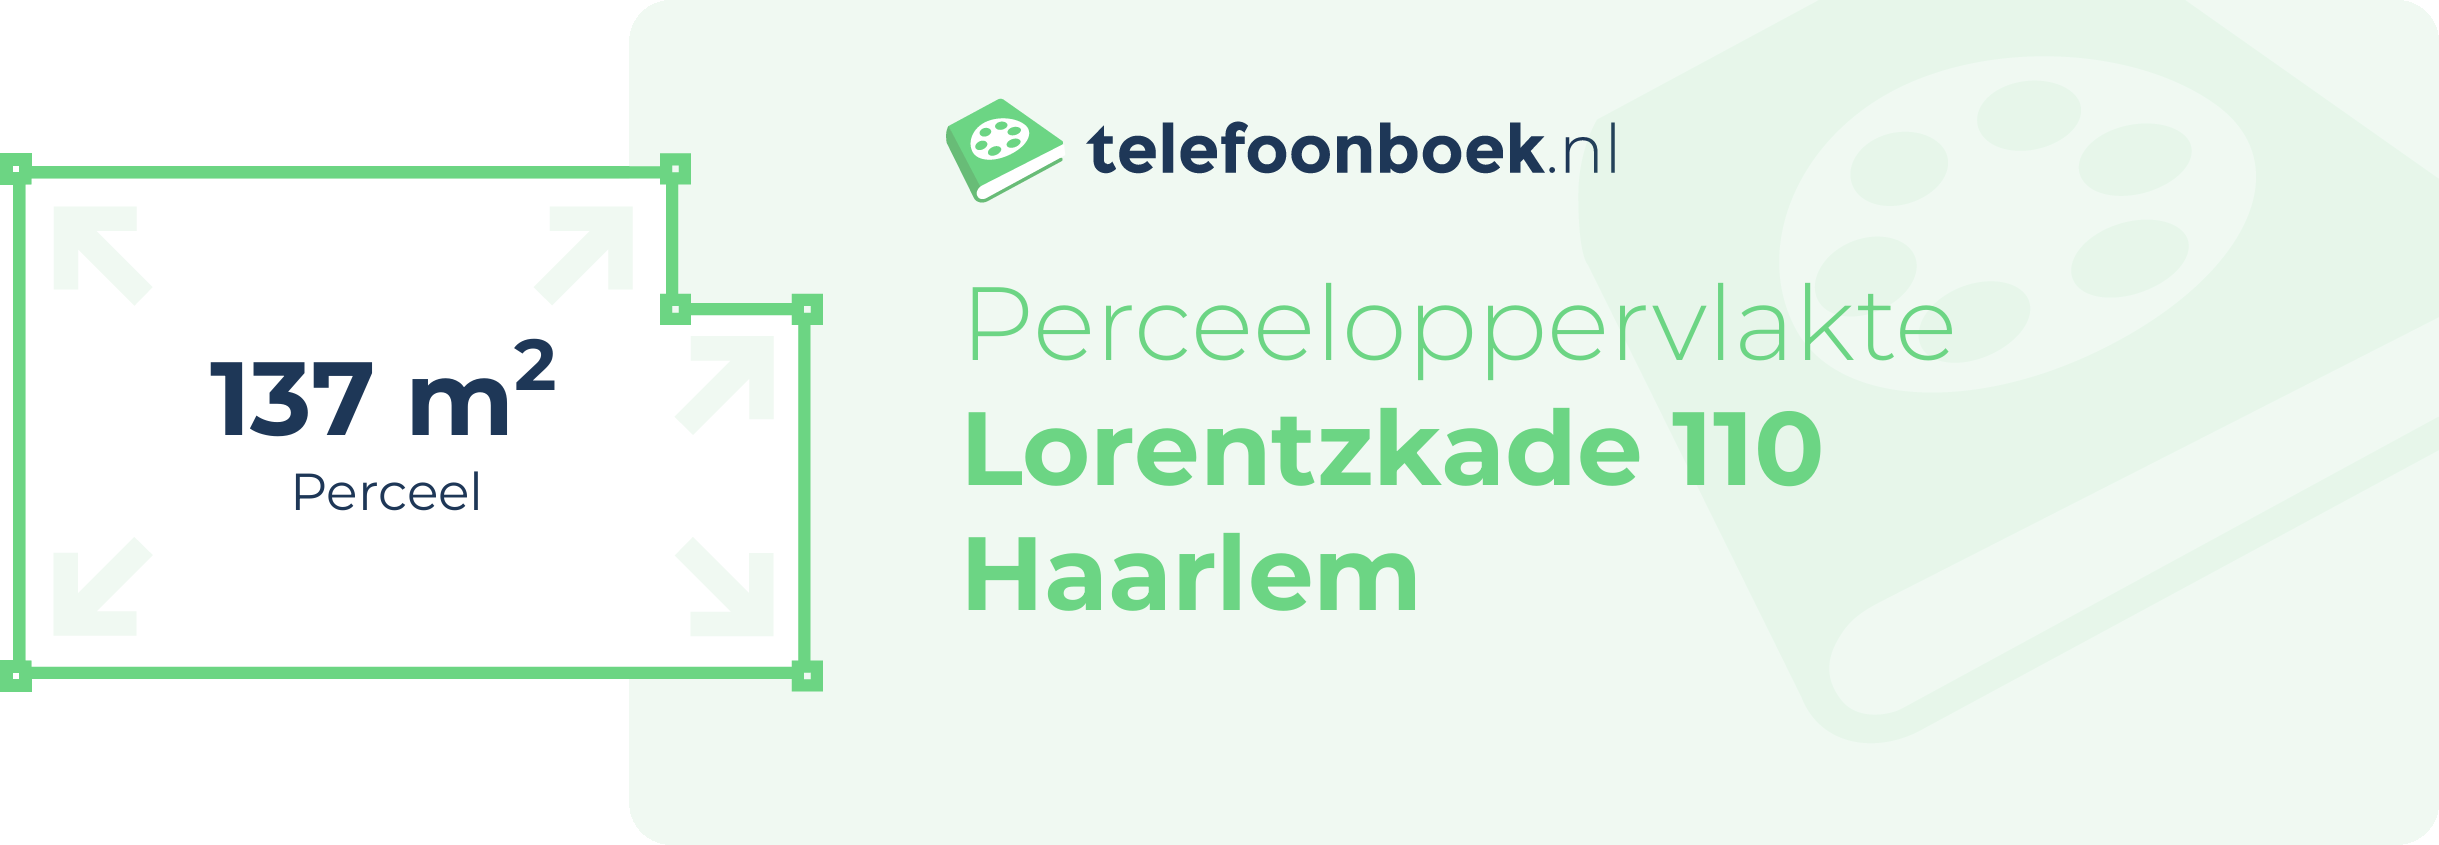 Perceeloppervlakte Lorentzkade 110 Haarlem